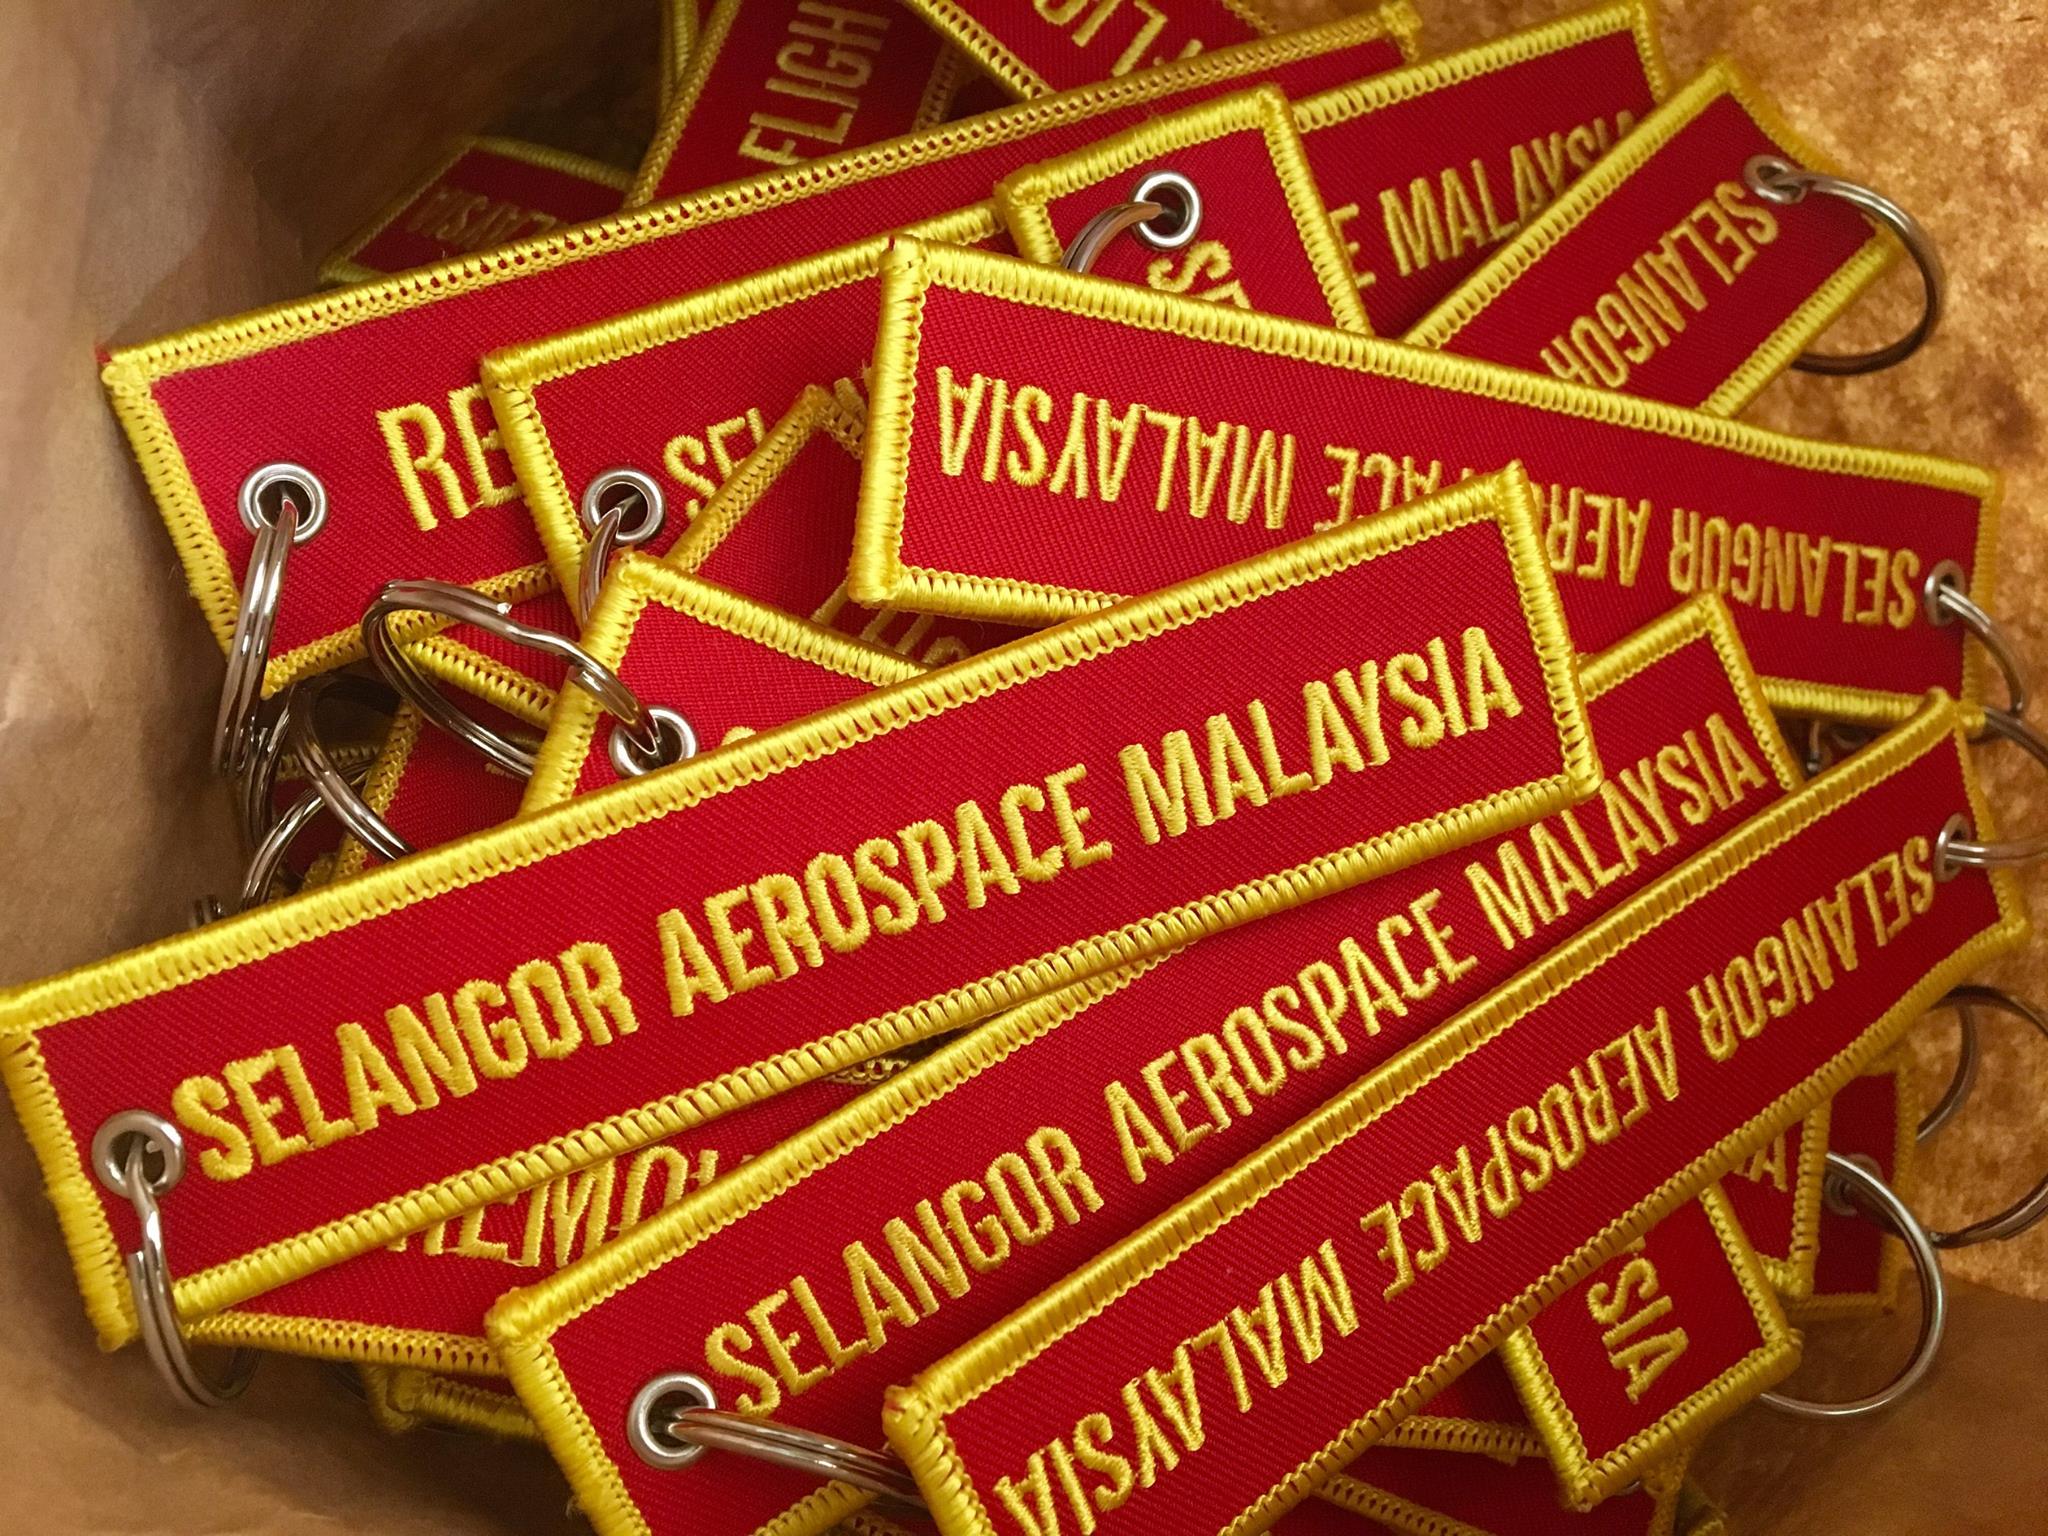 Selangor Aerospace Malaysia